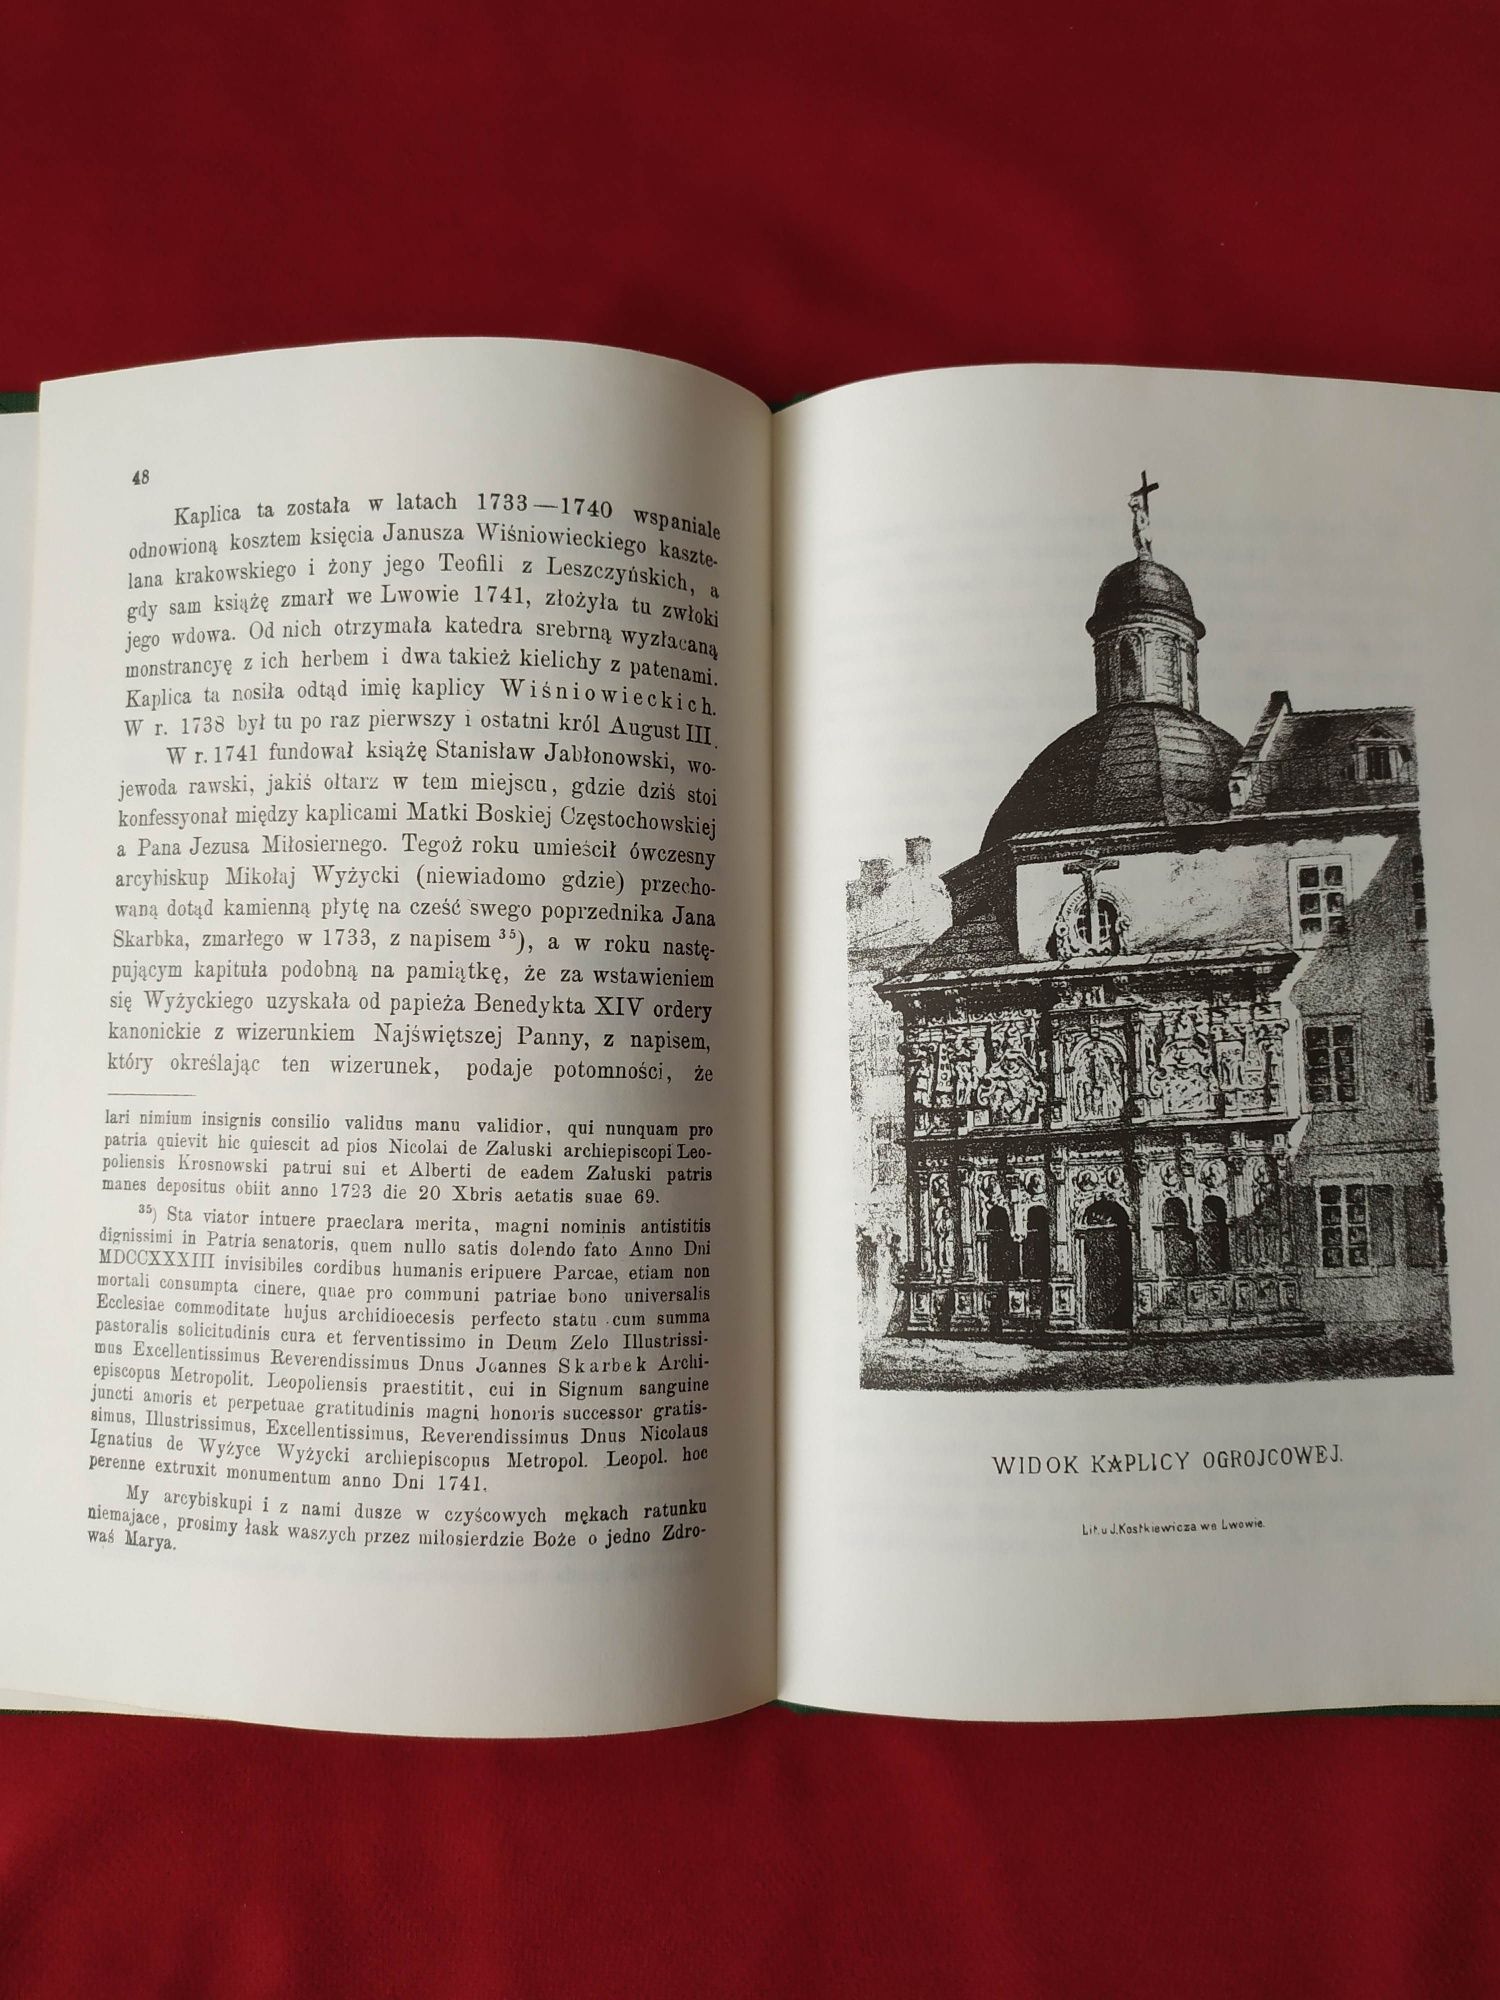 Kościół katedralny lwowski - reprint